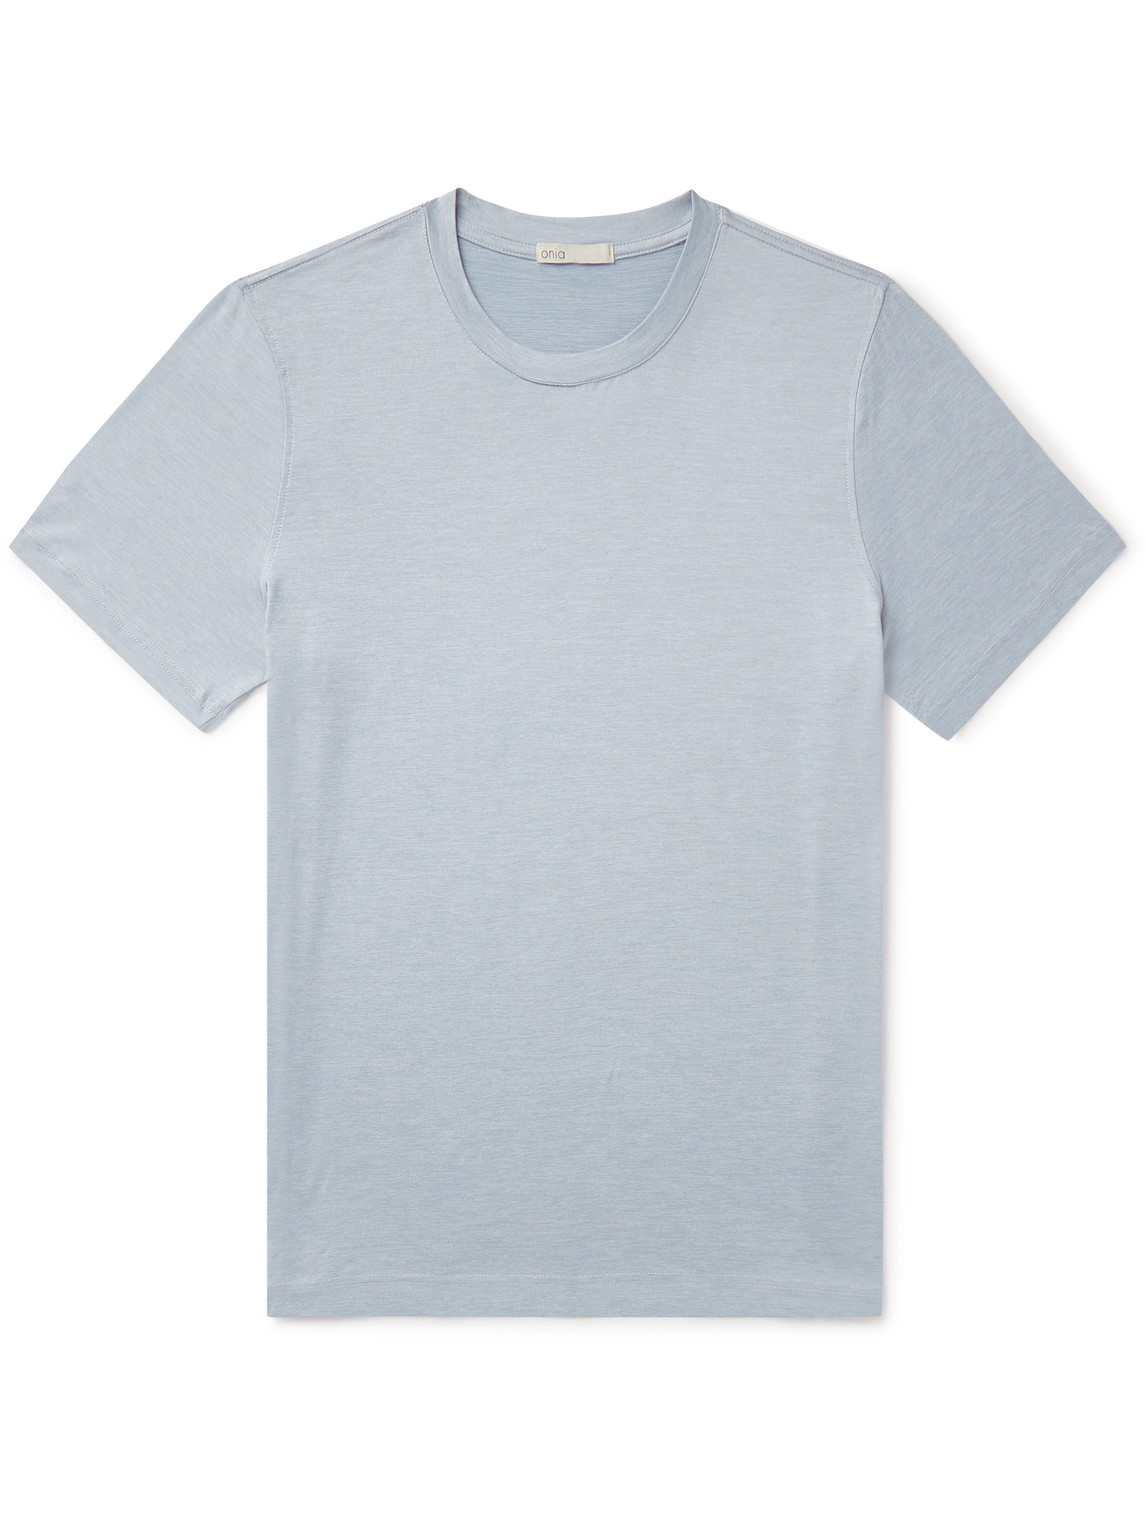 Onia - Everyday UltraLite Stretch-Jersey T-Shirt - Men - Blue - L von Onia